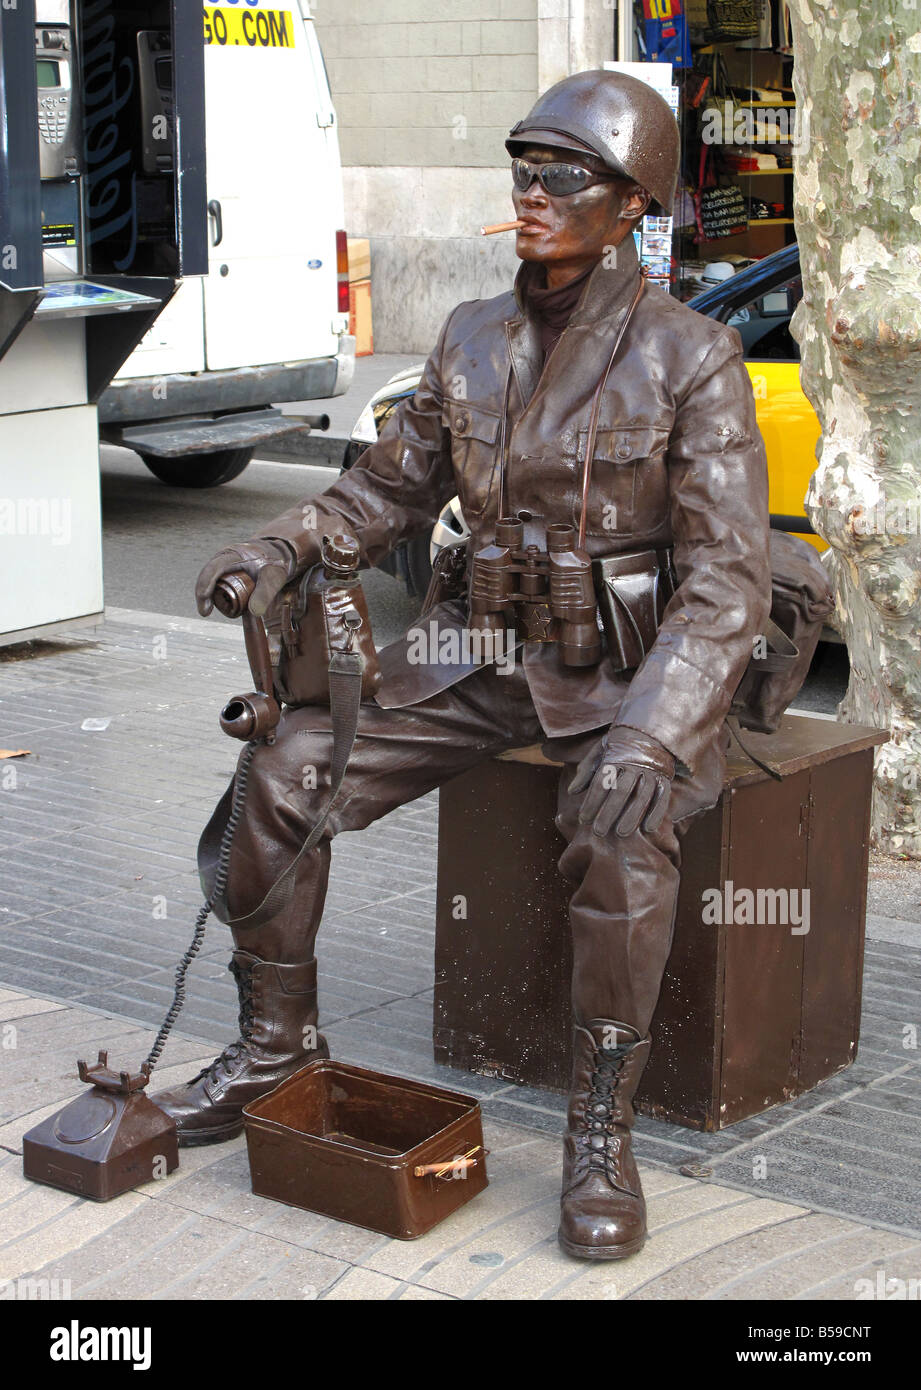 Street statue artist dressed as uniformed Japanese World War II communications soldier on La Rambla, Barcelona, Spain Stock Photo